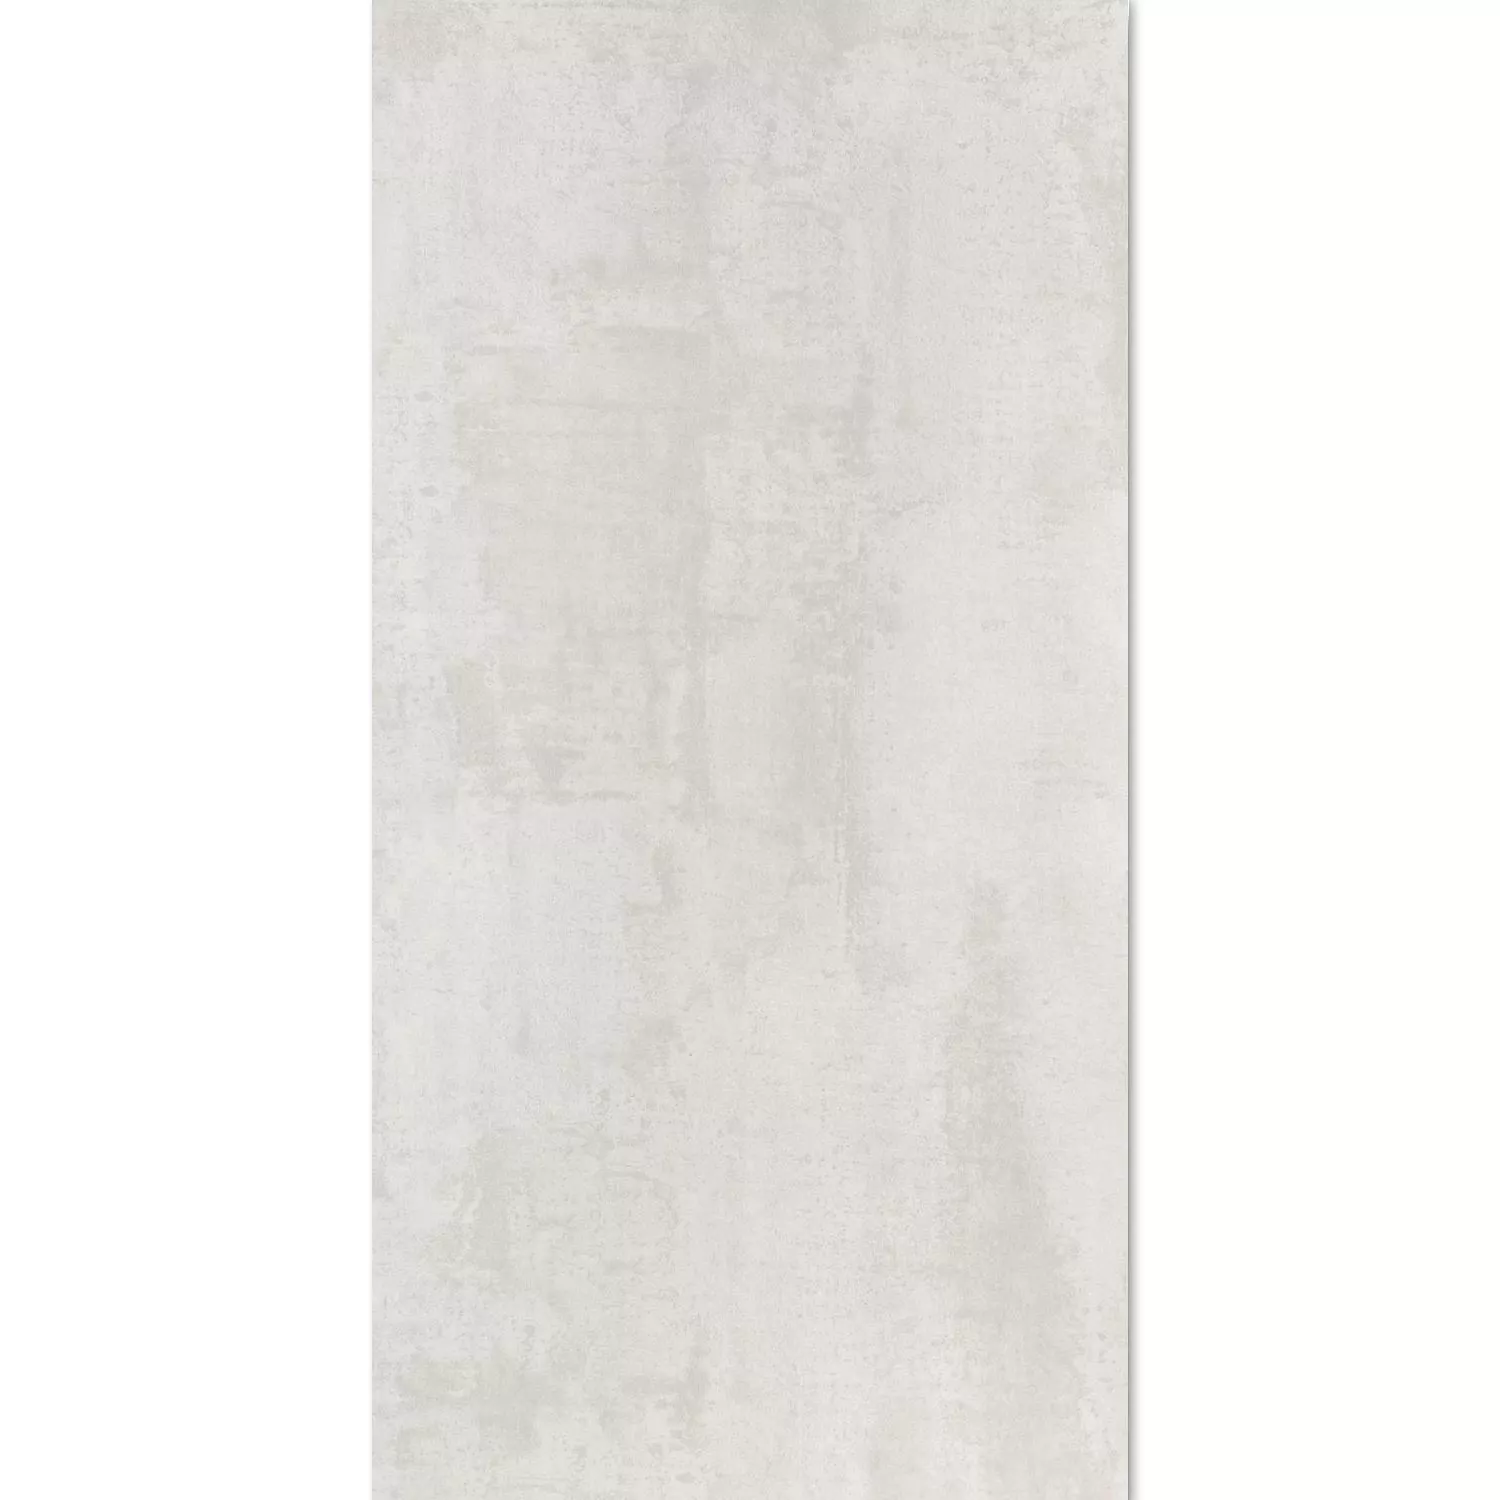 Vloertegels Herion Metaal Lappato Blanco 45x90cm